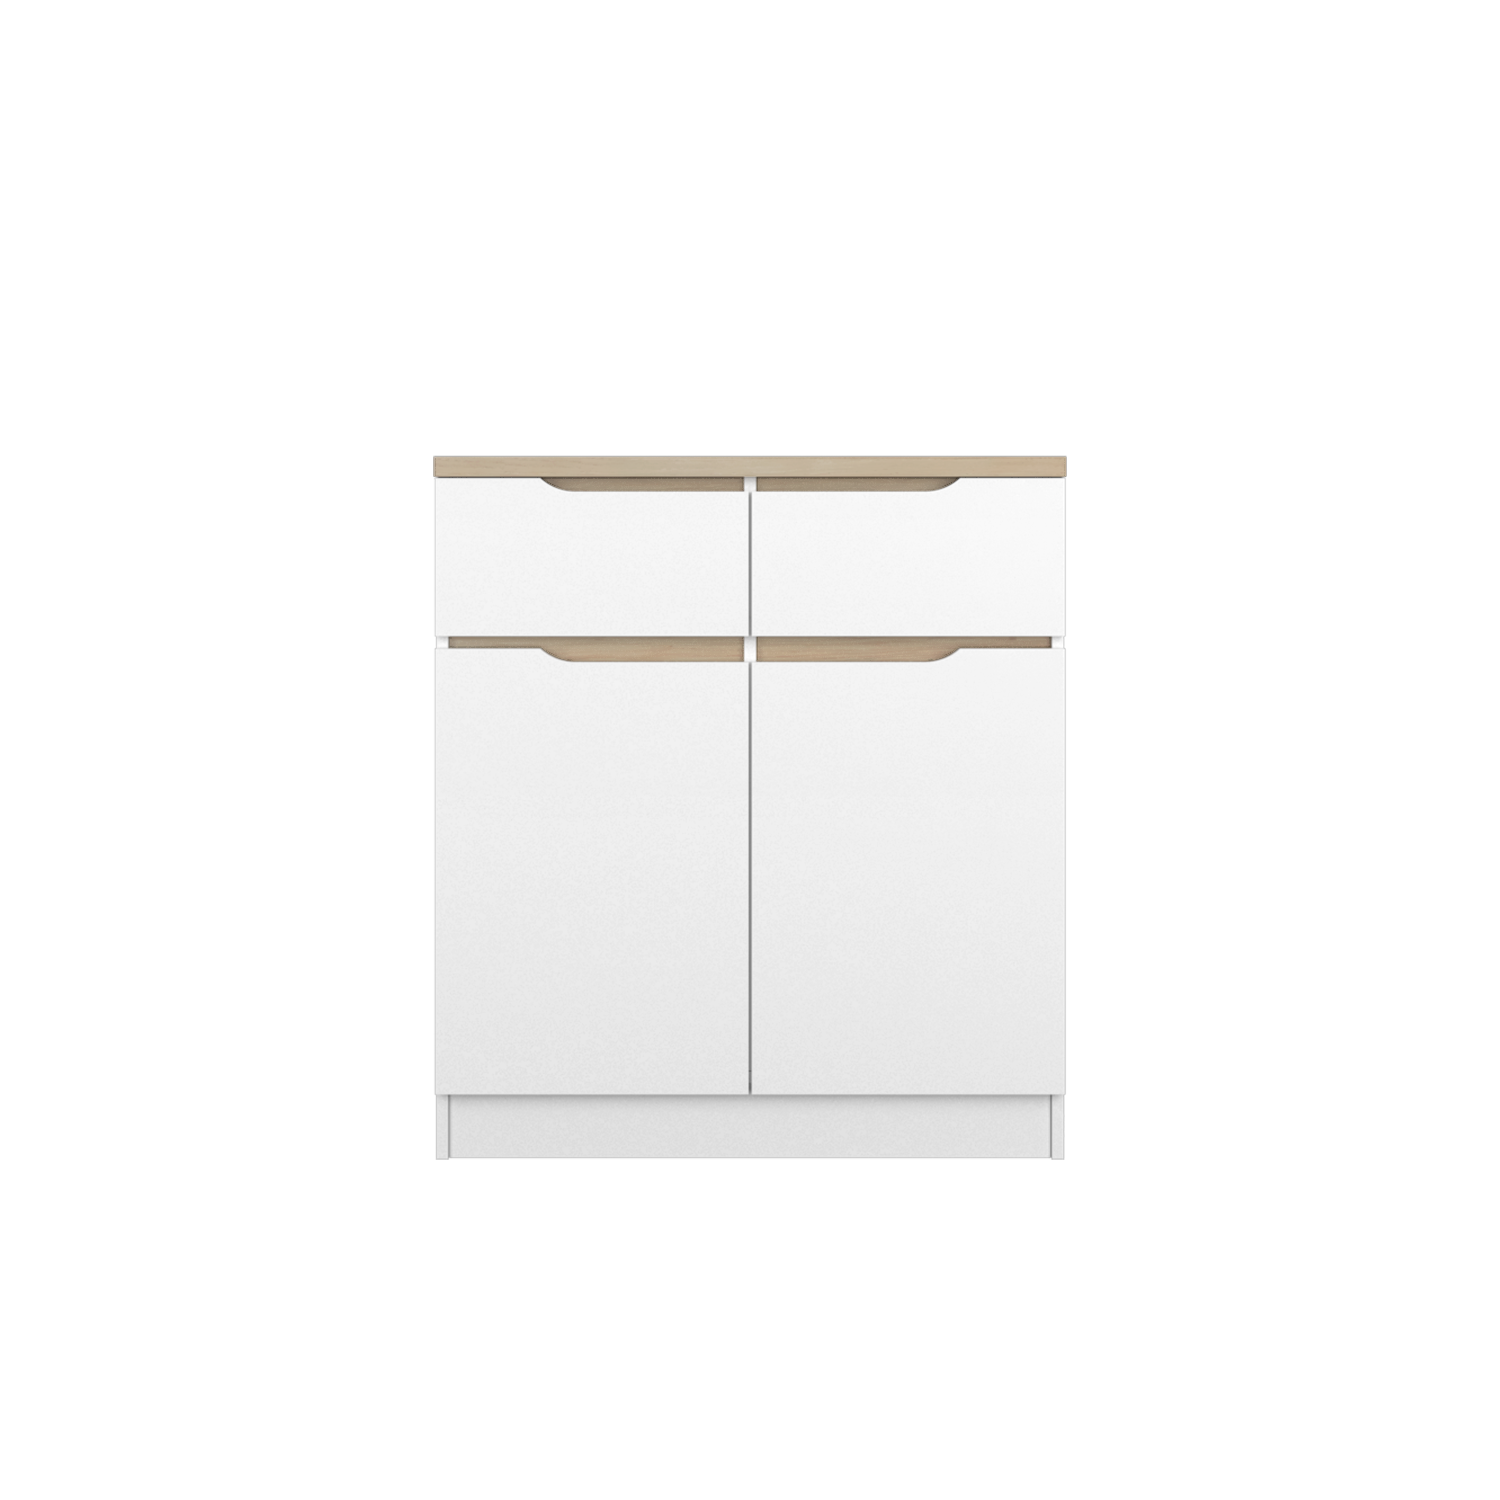 (FREE Shipping) 2.6FT Sinowa Series Full Melamine Kitchen Cabinets Bas ...